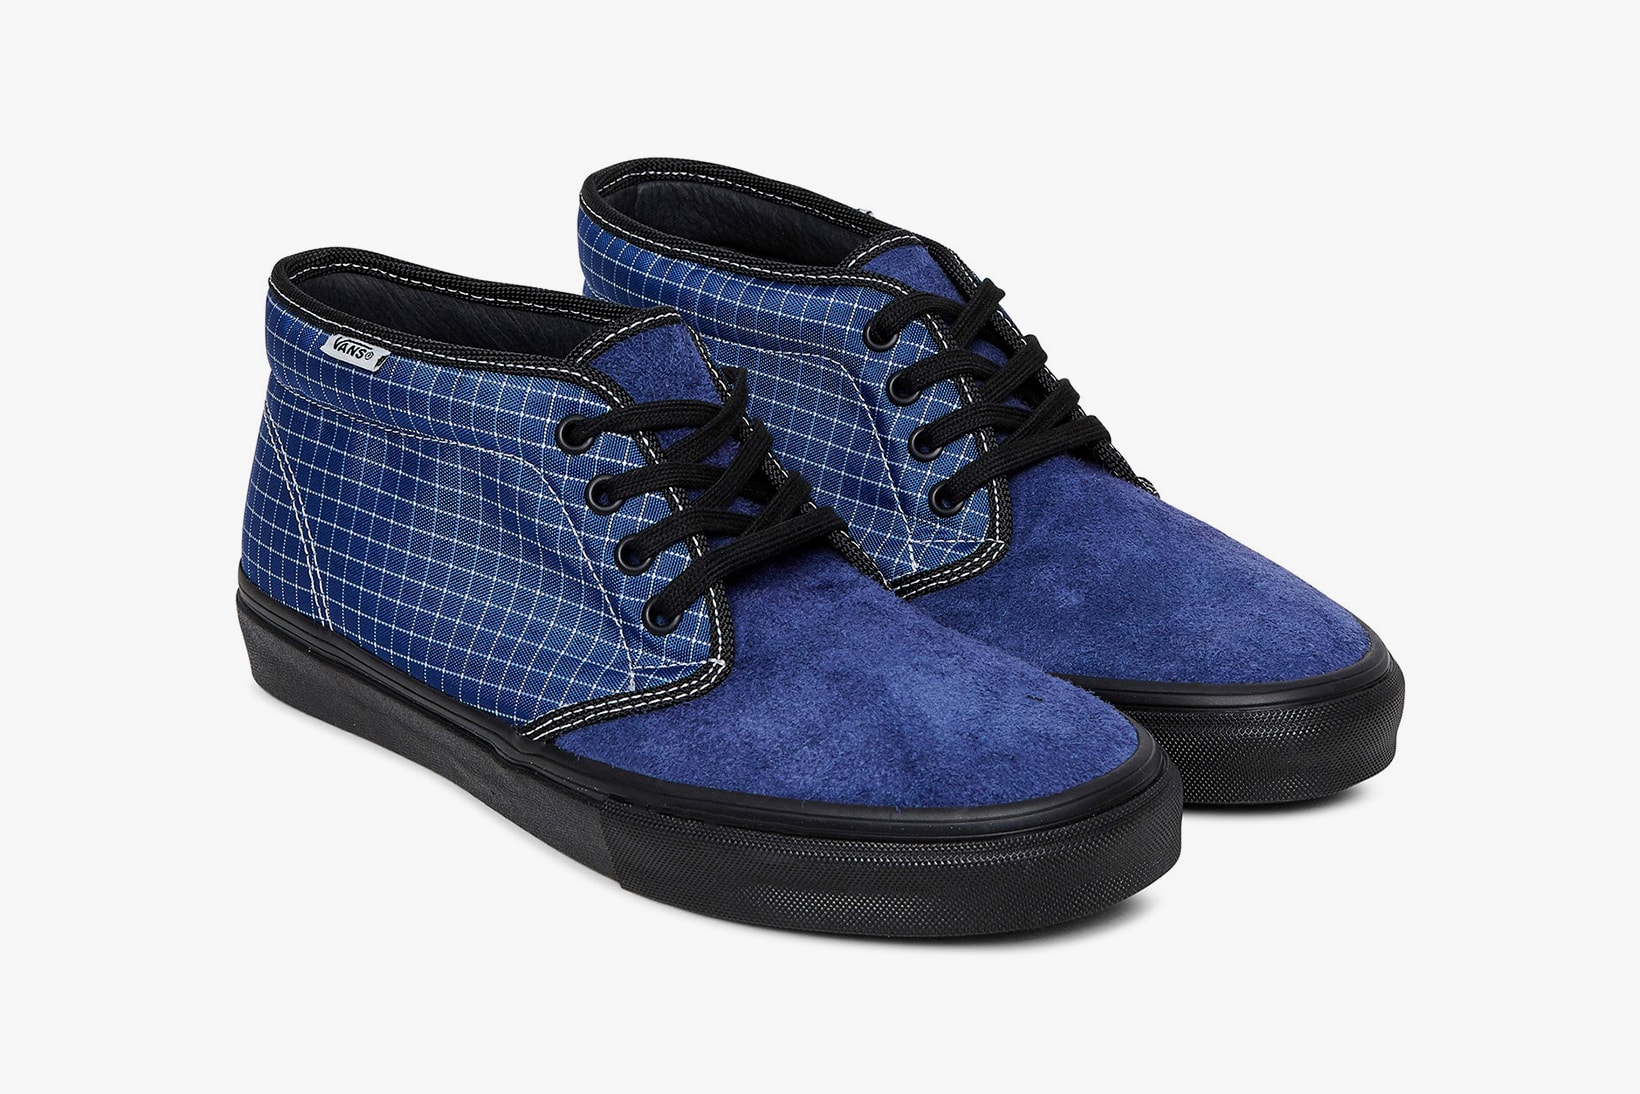 Starcow Vans Vault Chukka LX Old Skool Lite LX may 2018 release date info dtop sneakers shoes footwear blue black collaboration paris windowpane check grid